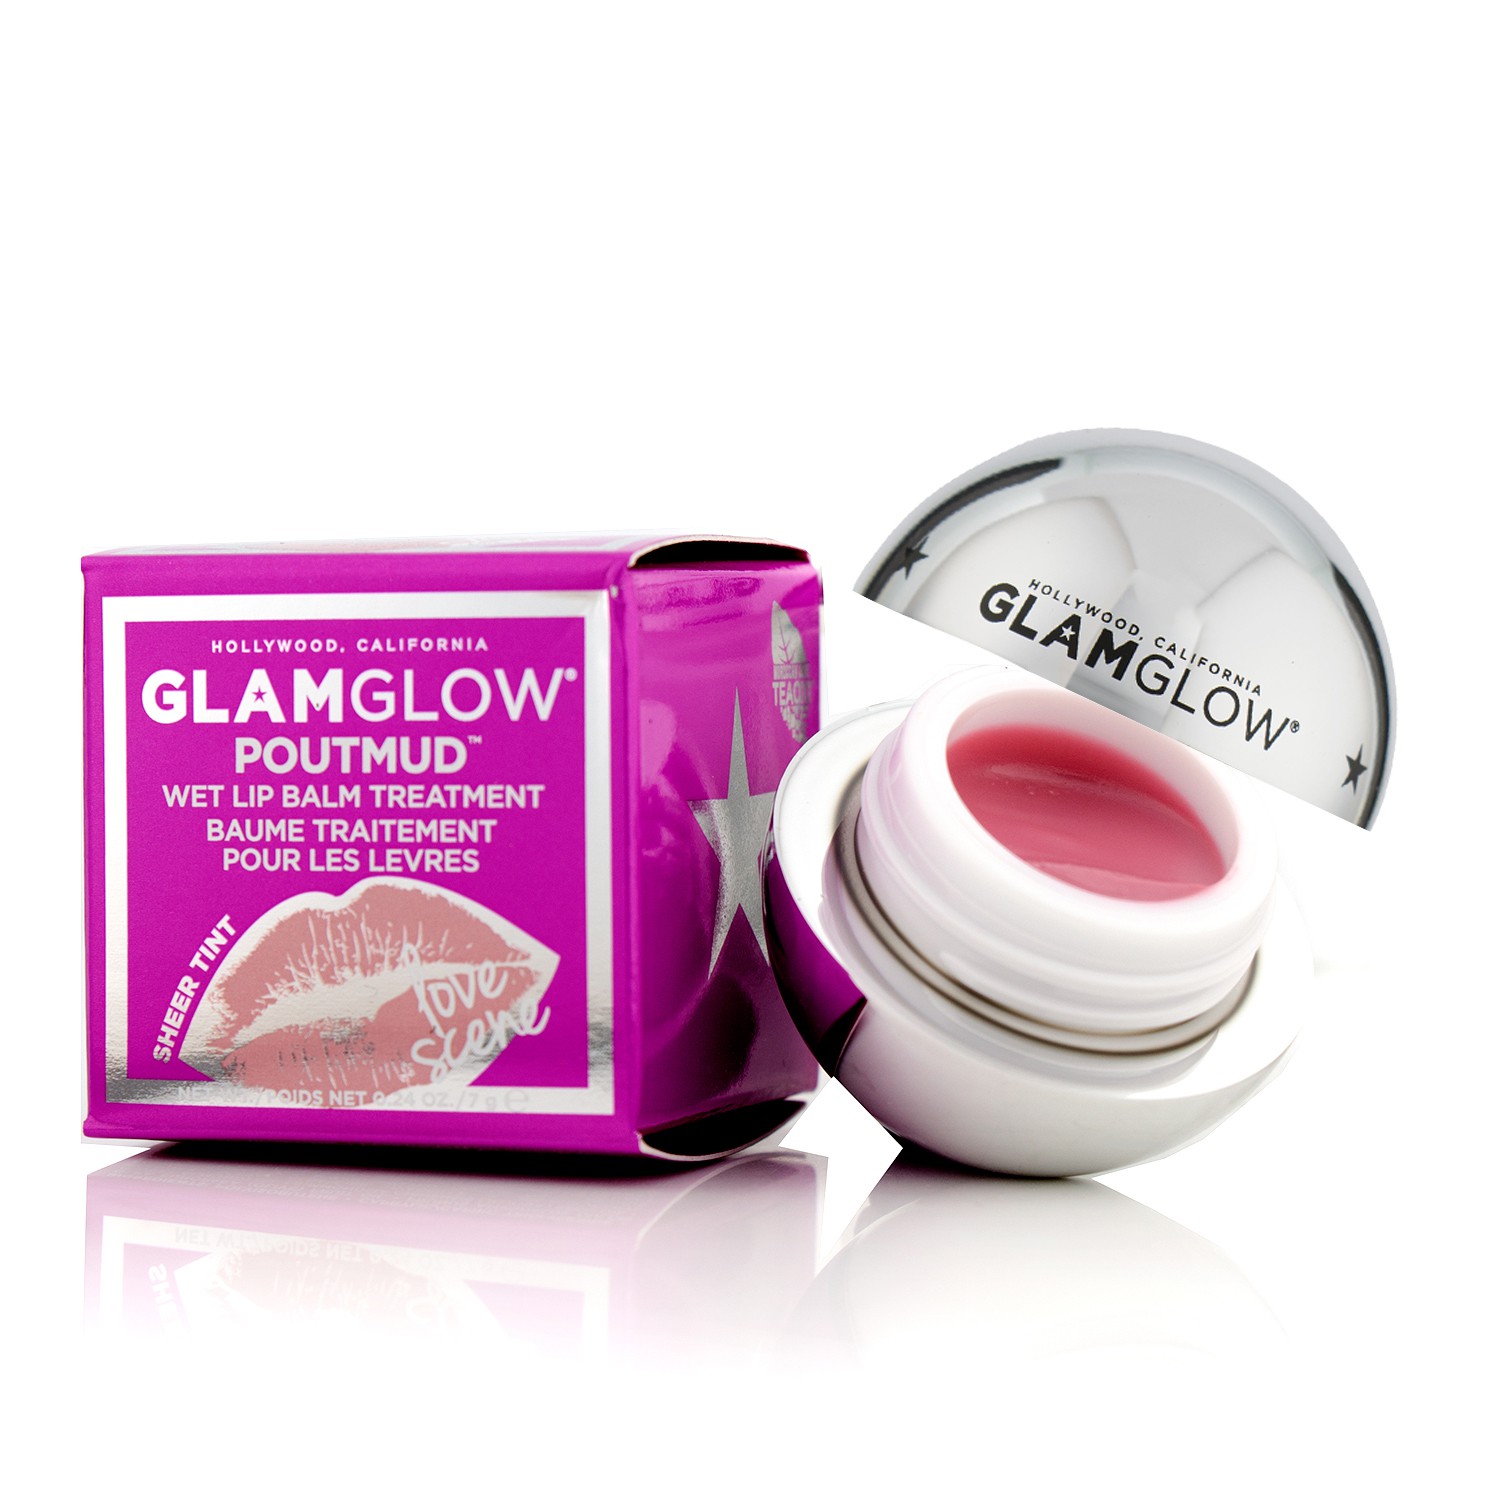 PoutMud Sheer Tint Wet Lip Balm Treatment - Love Scene Glamglow Image